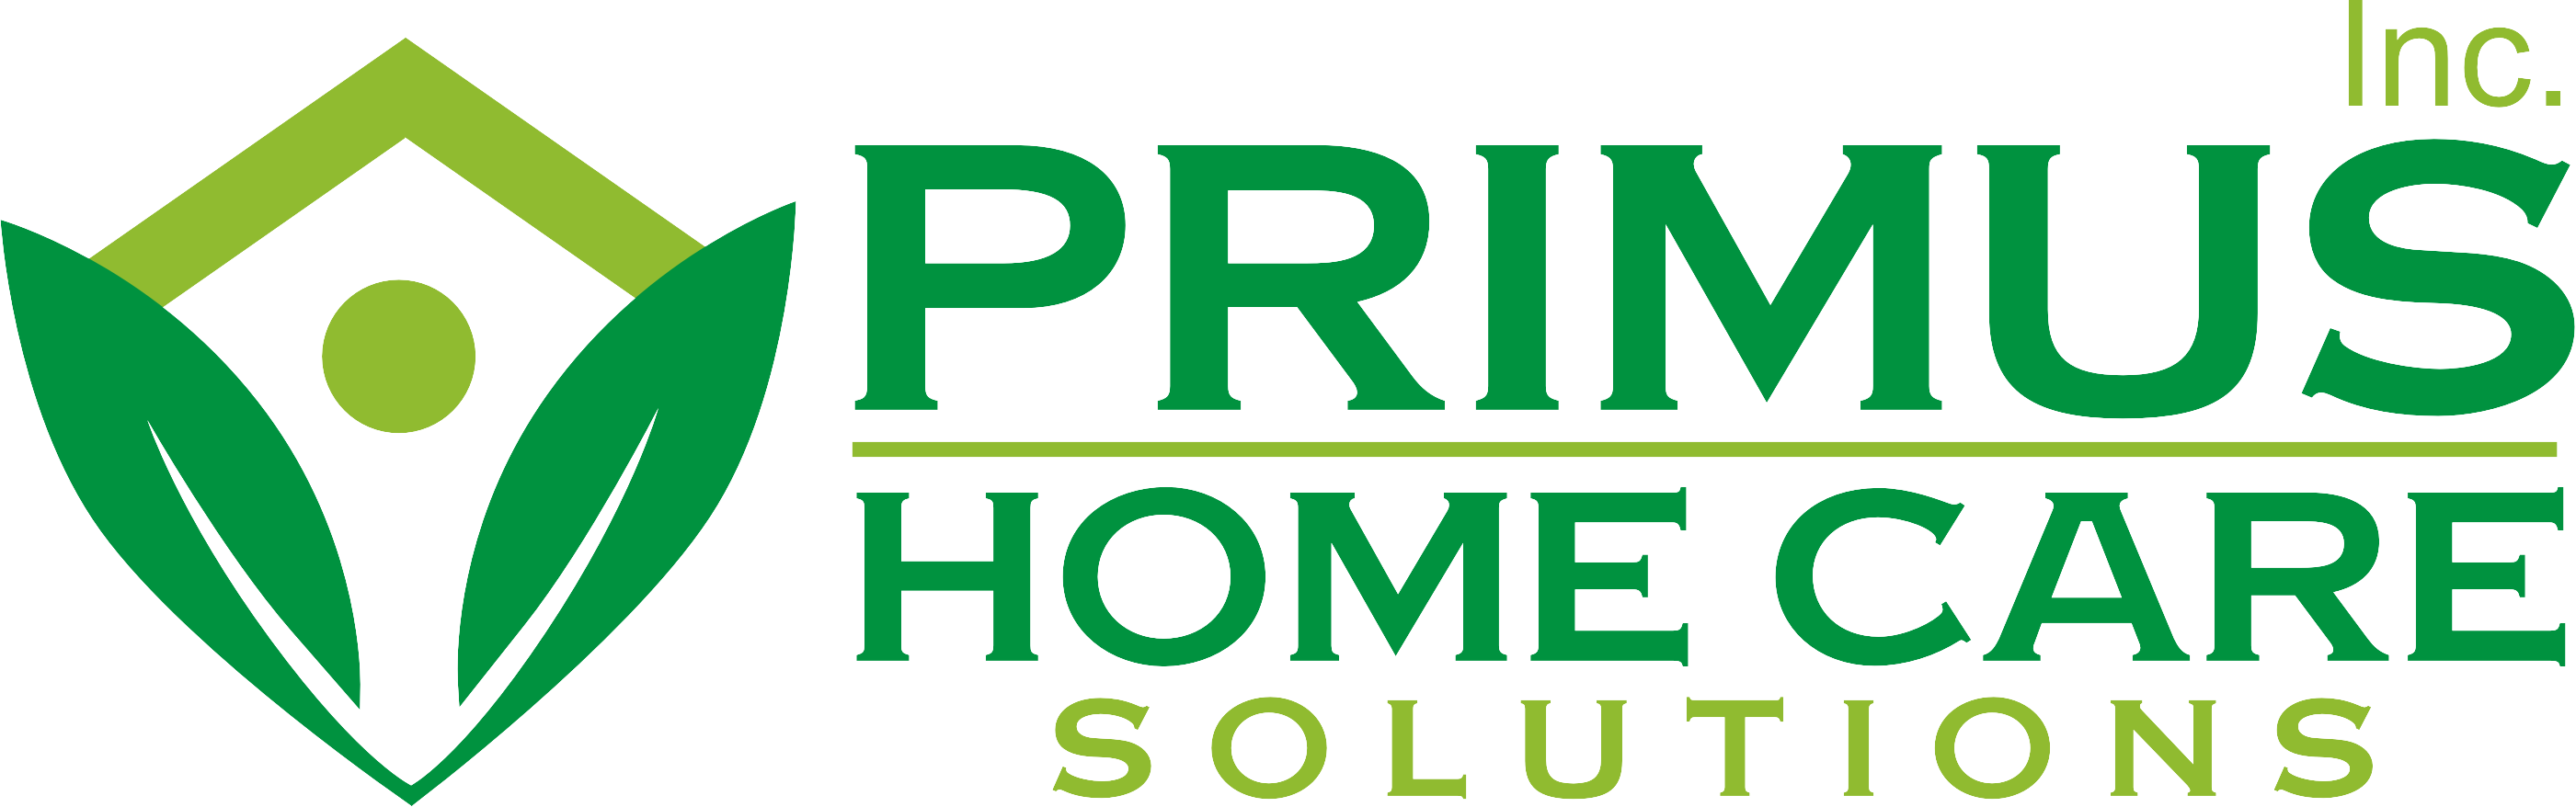 primus home care logo